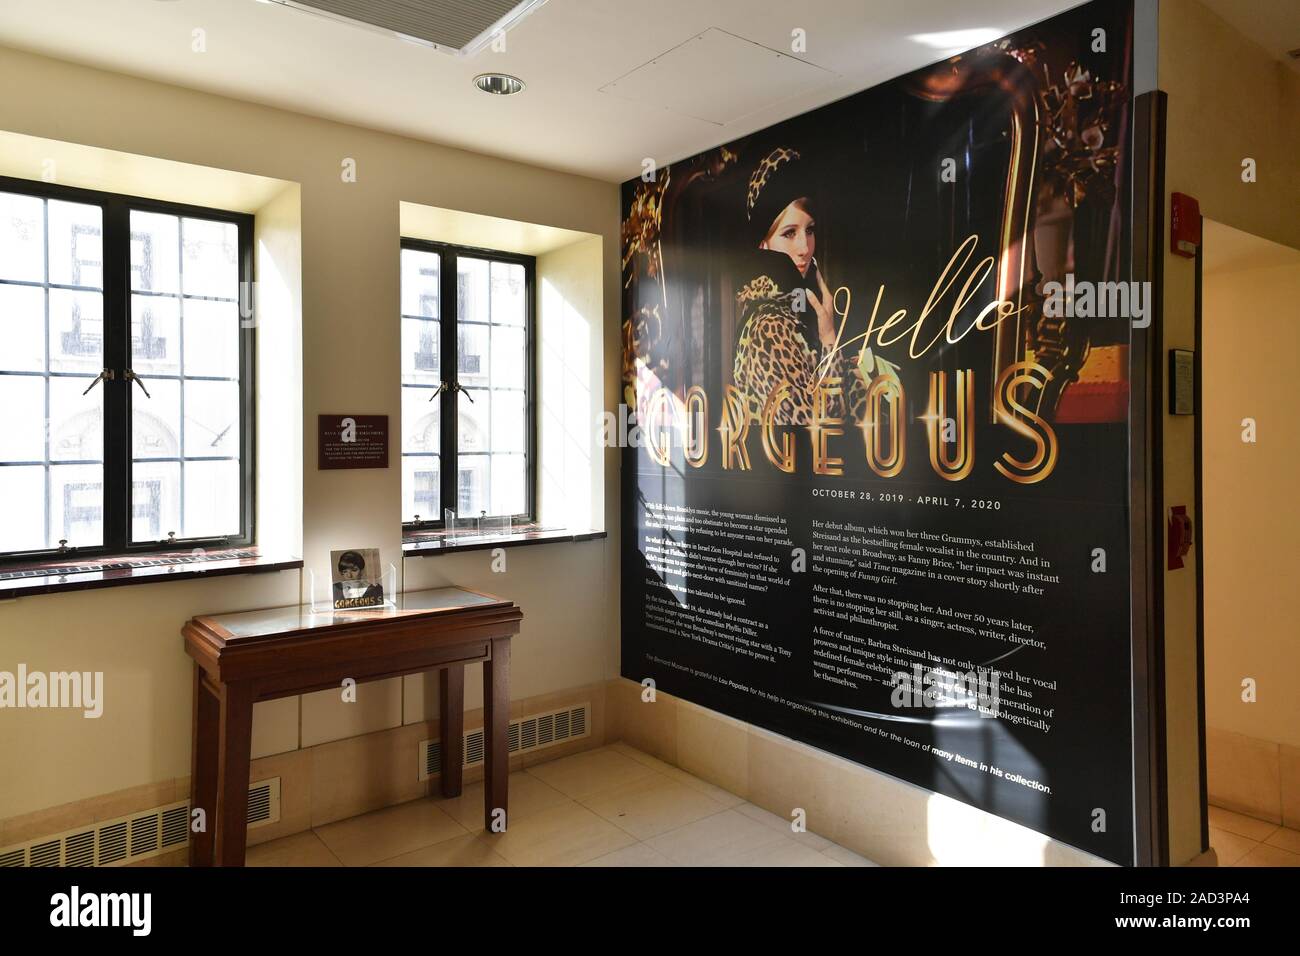 Barbra Streisand "Hello Gorgeous" Ausstellung in der Bernard Museum im inneren Tempel Emanu-El, New York, USA - 26. Nov. 2019 Stockfoto